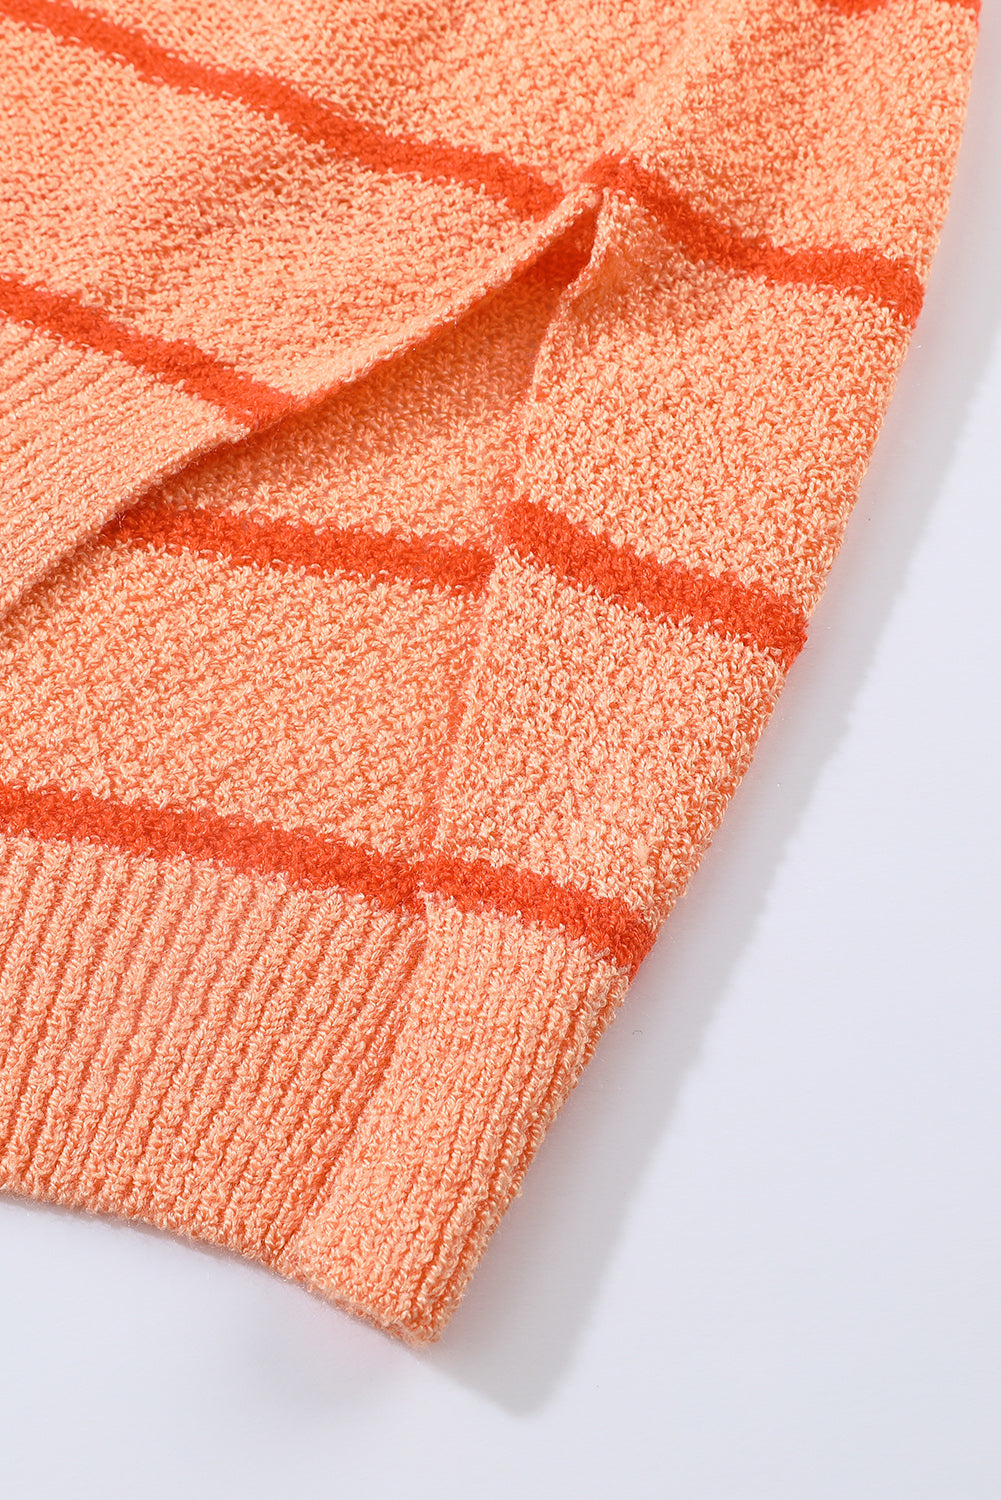 Multicolour Striped Color Block Loose Fit Knit Sweater OniTakai